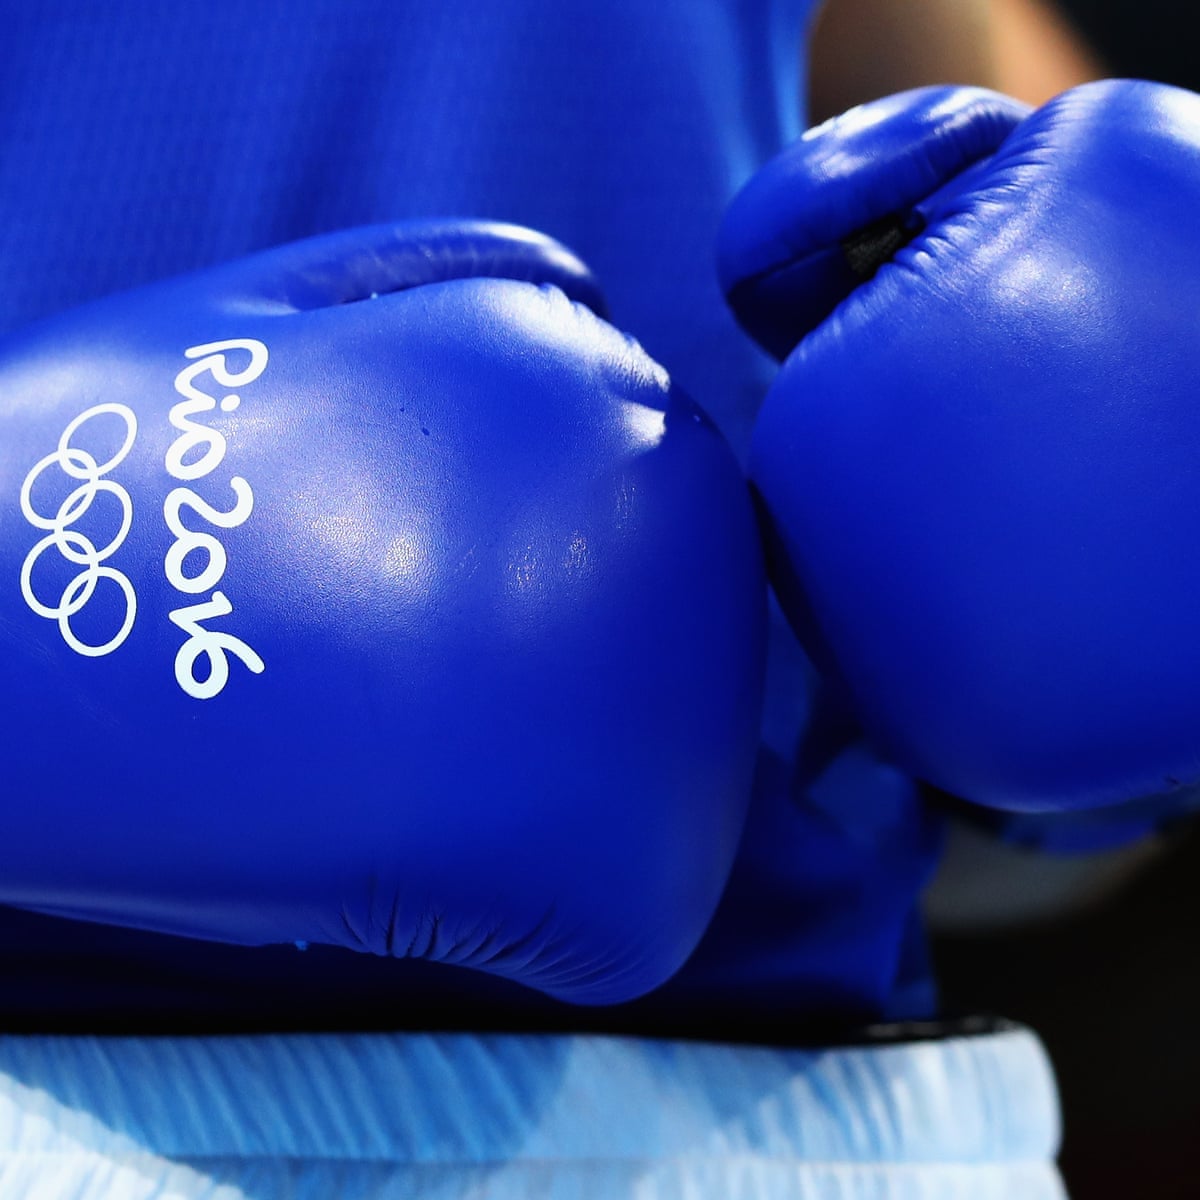 Olympics 2021 boxing